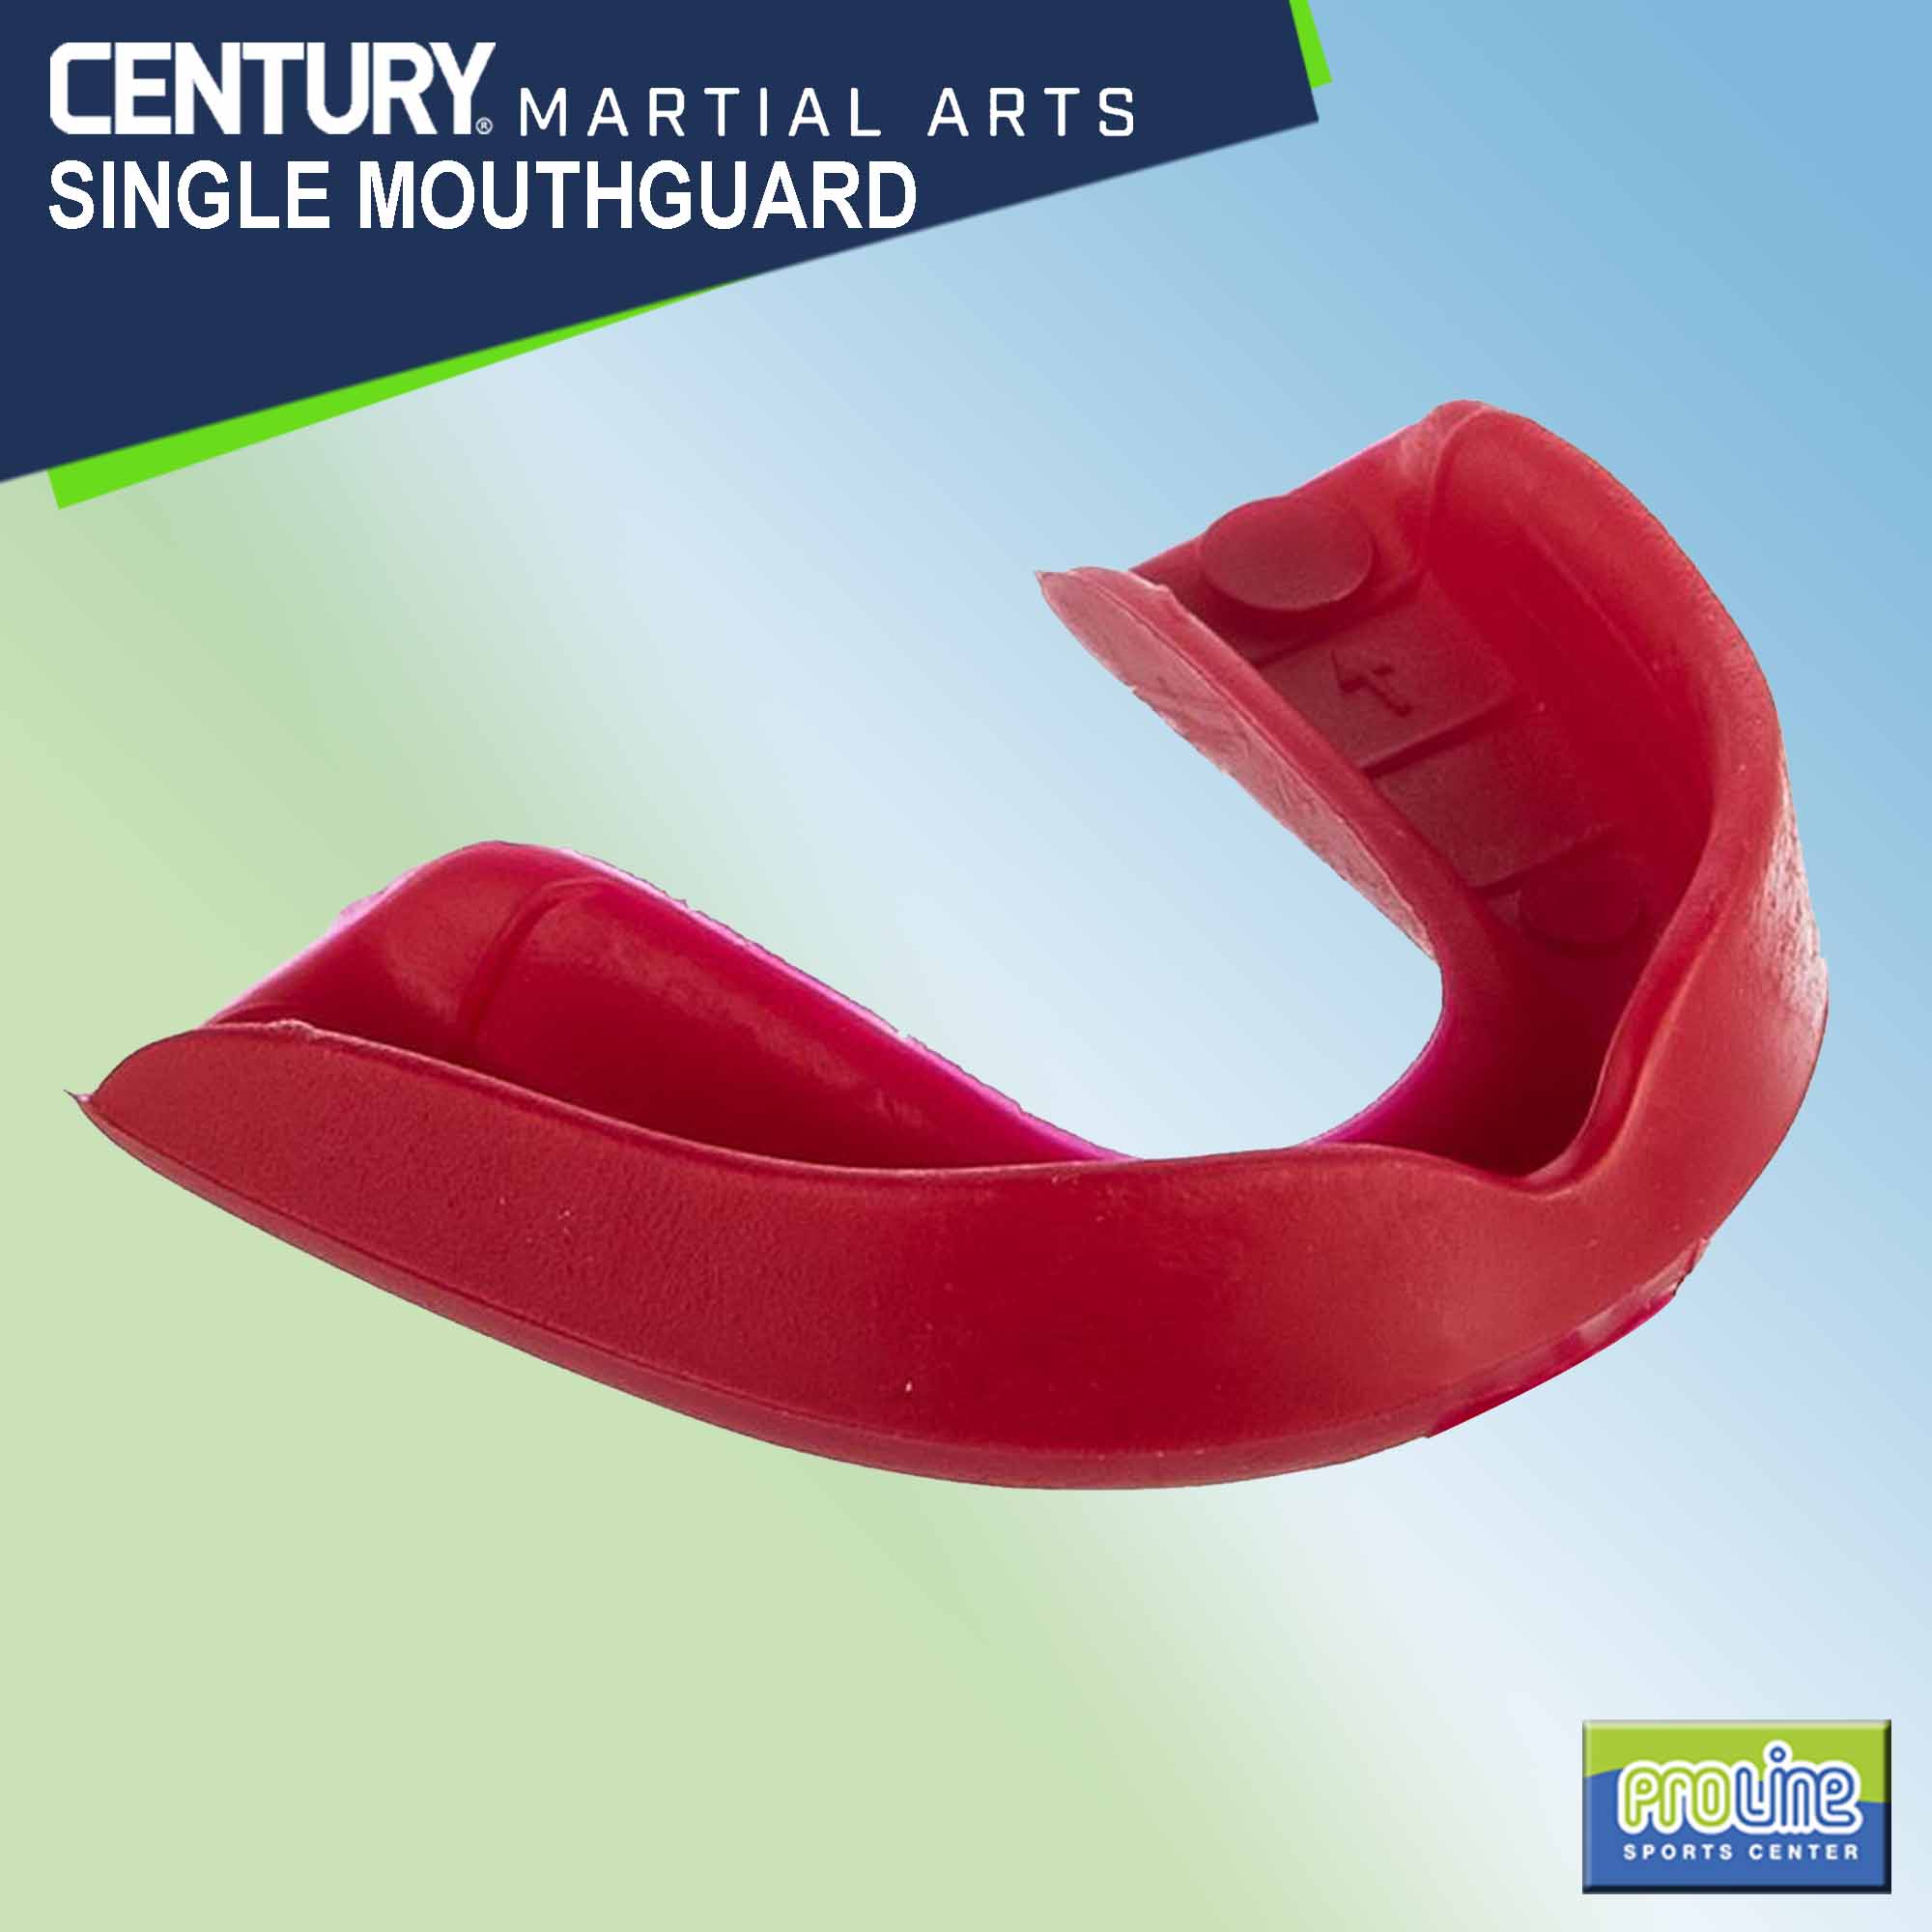 Single Mouthguard – Century Martial Arts